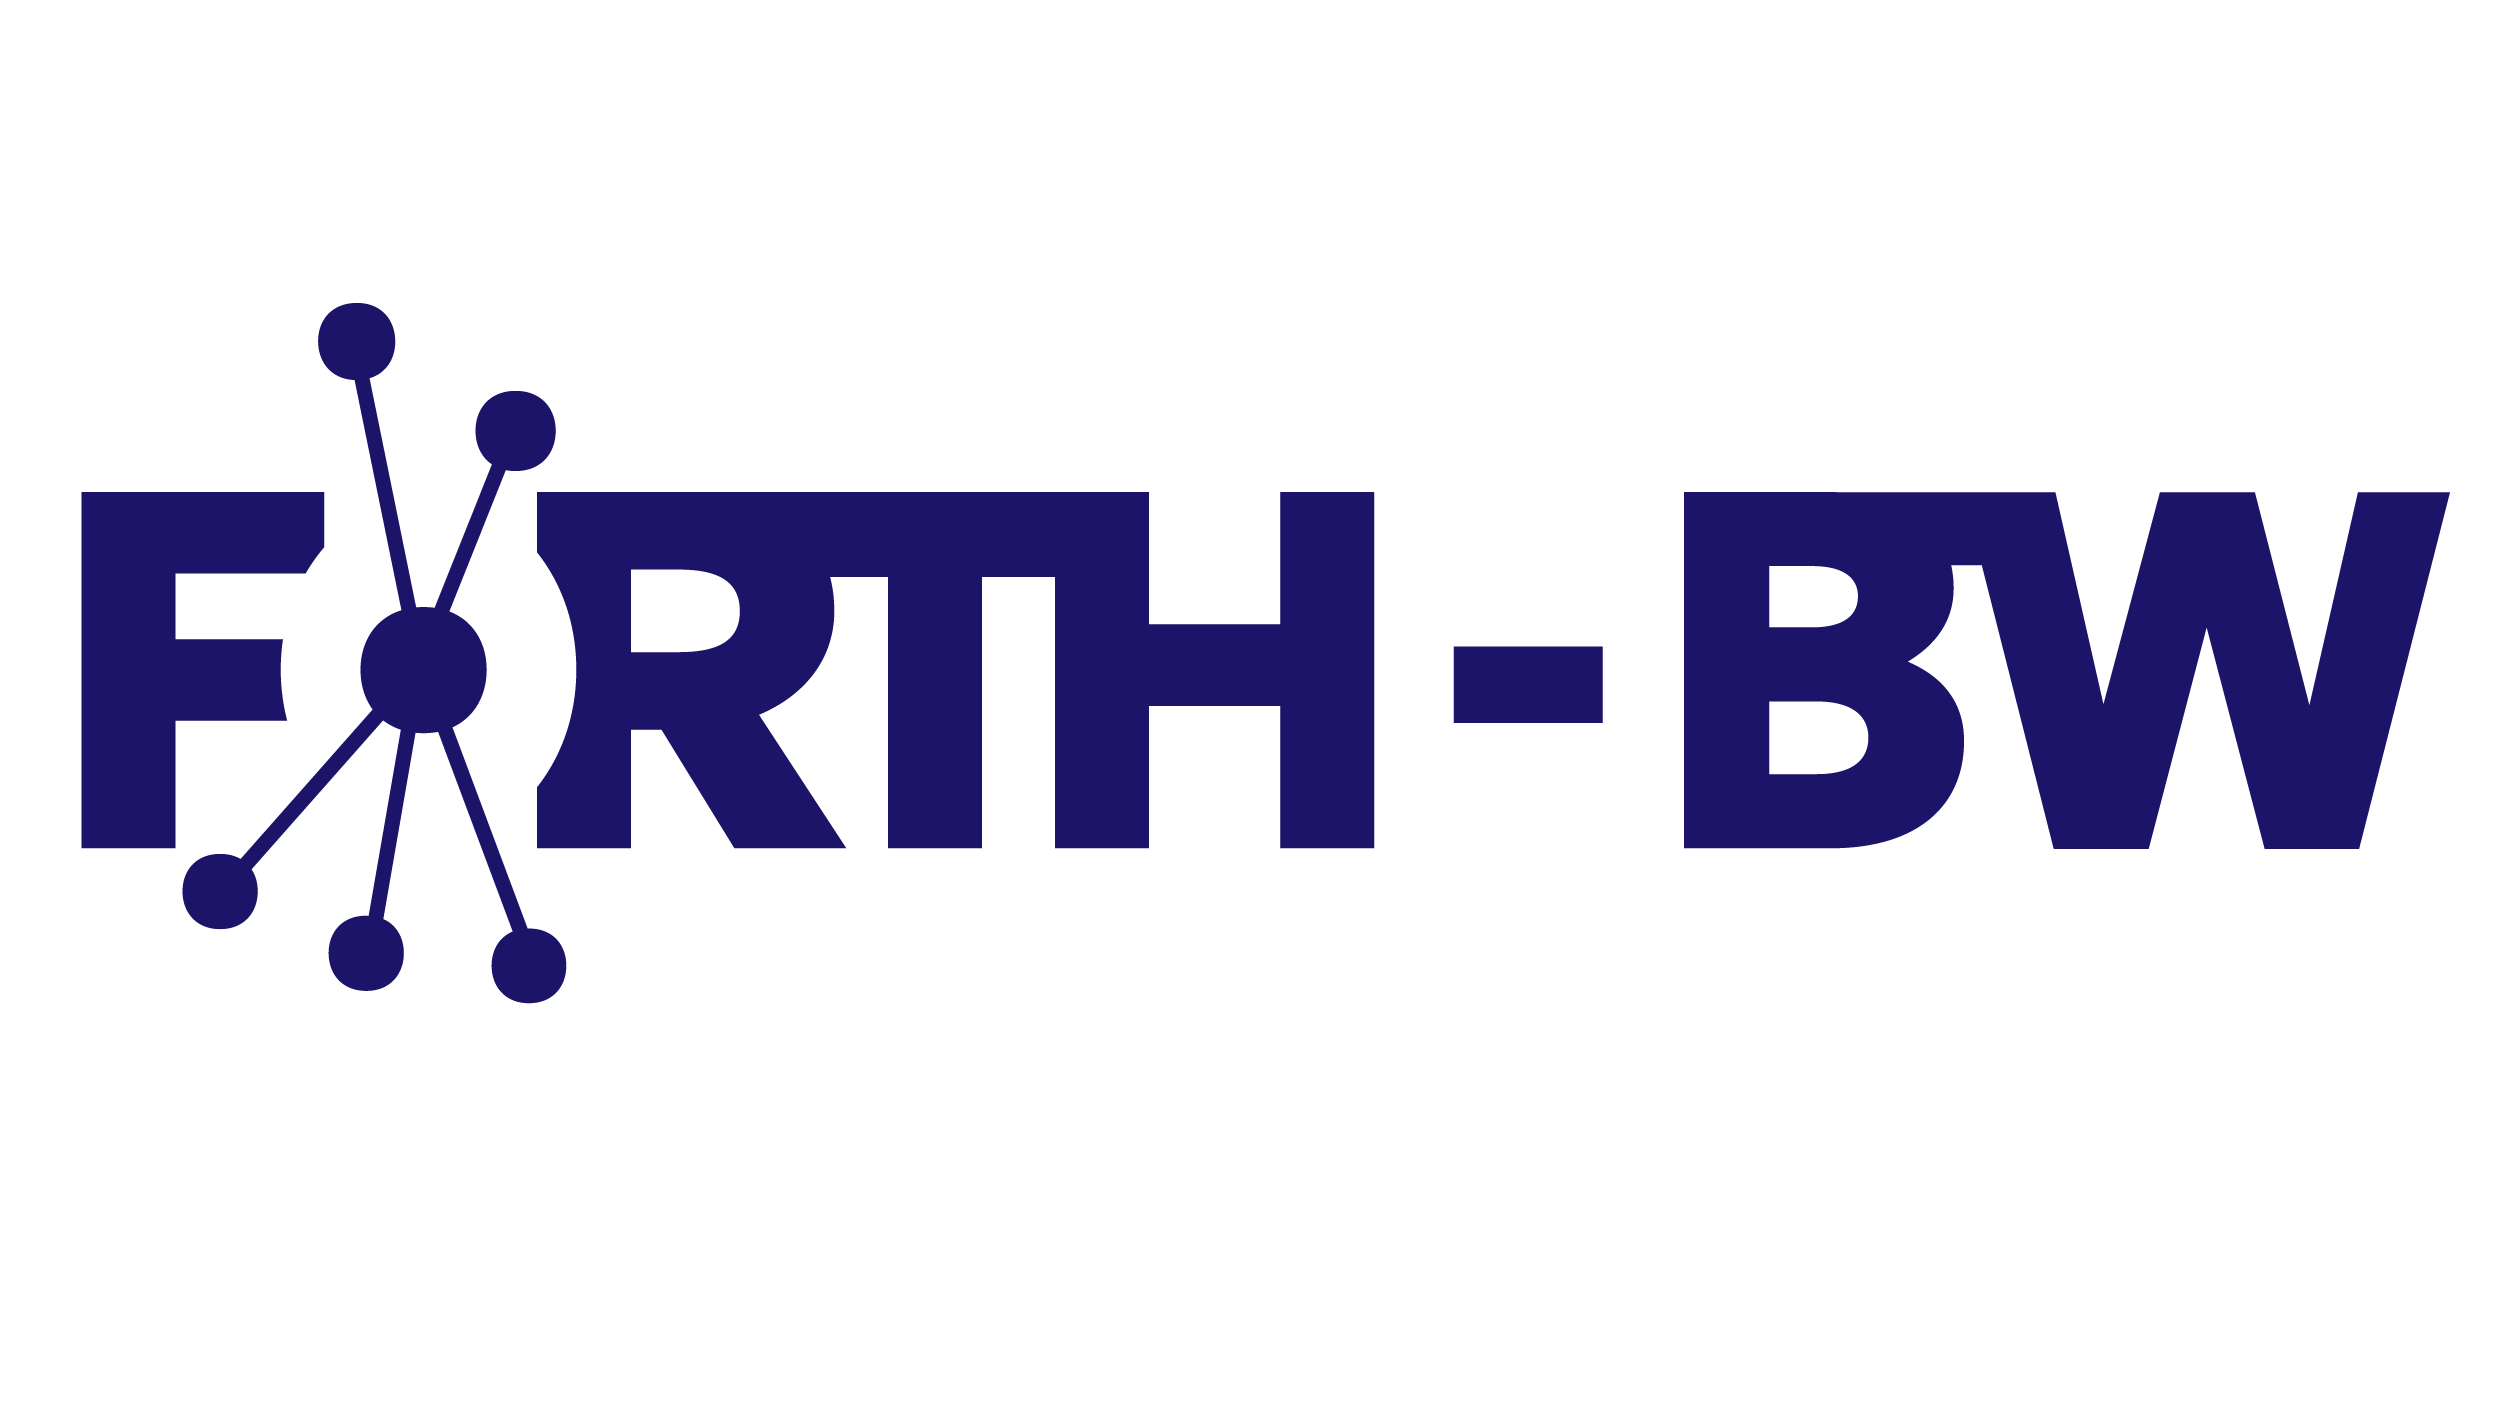 FORTH-bw Logo